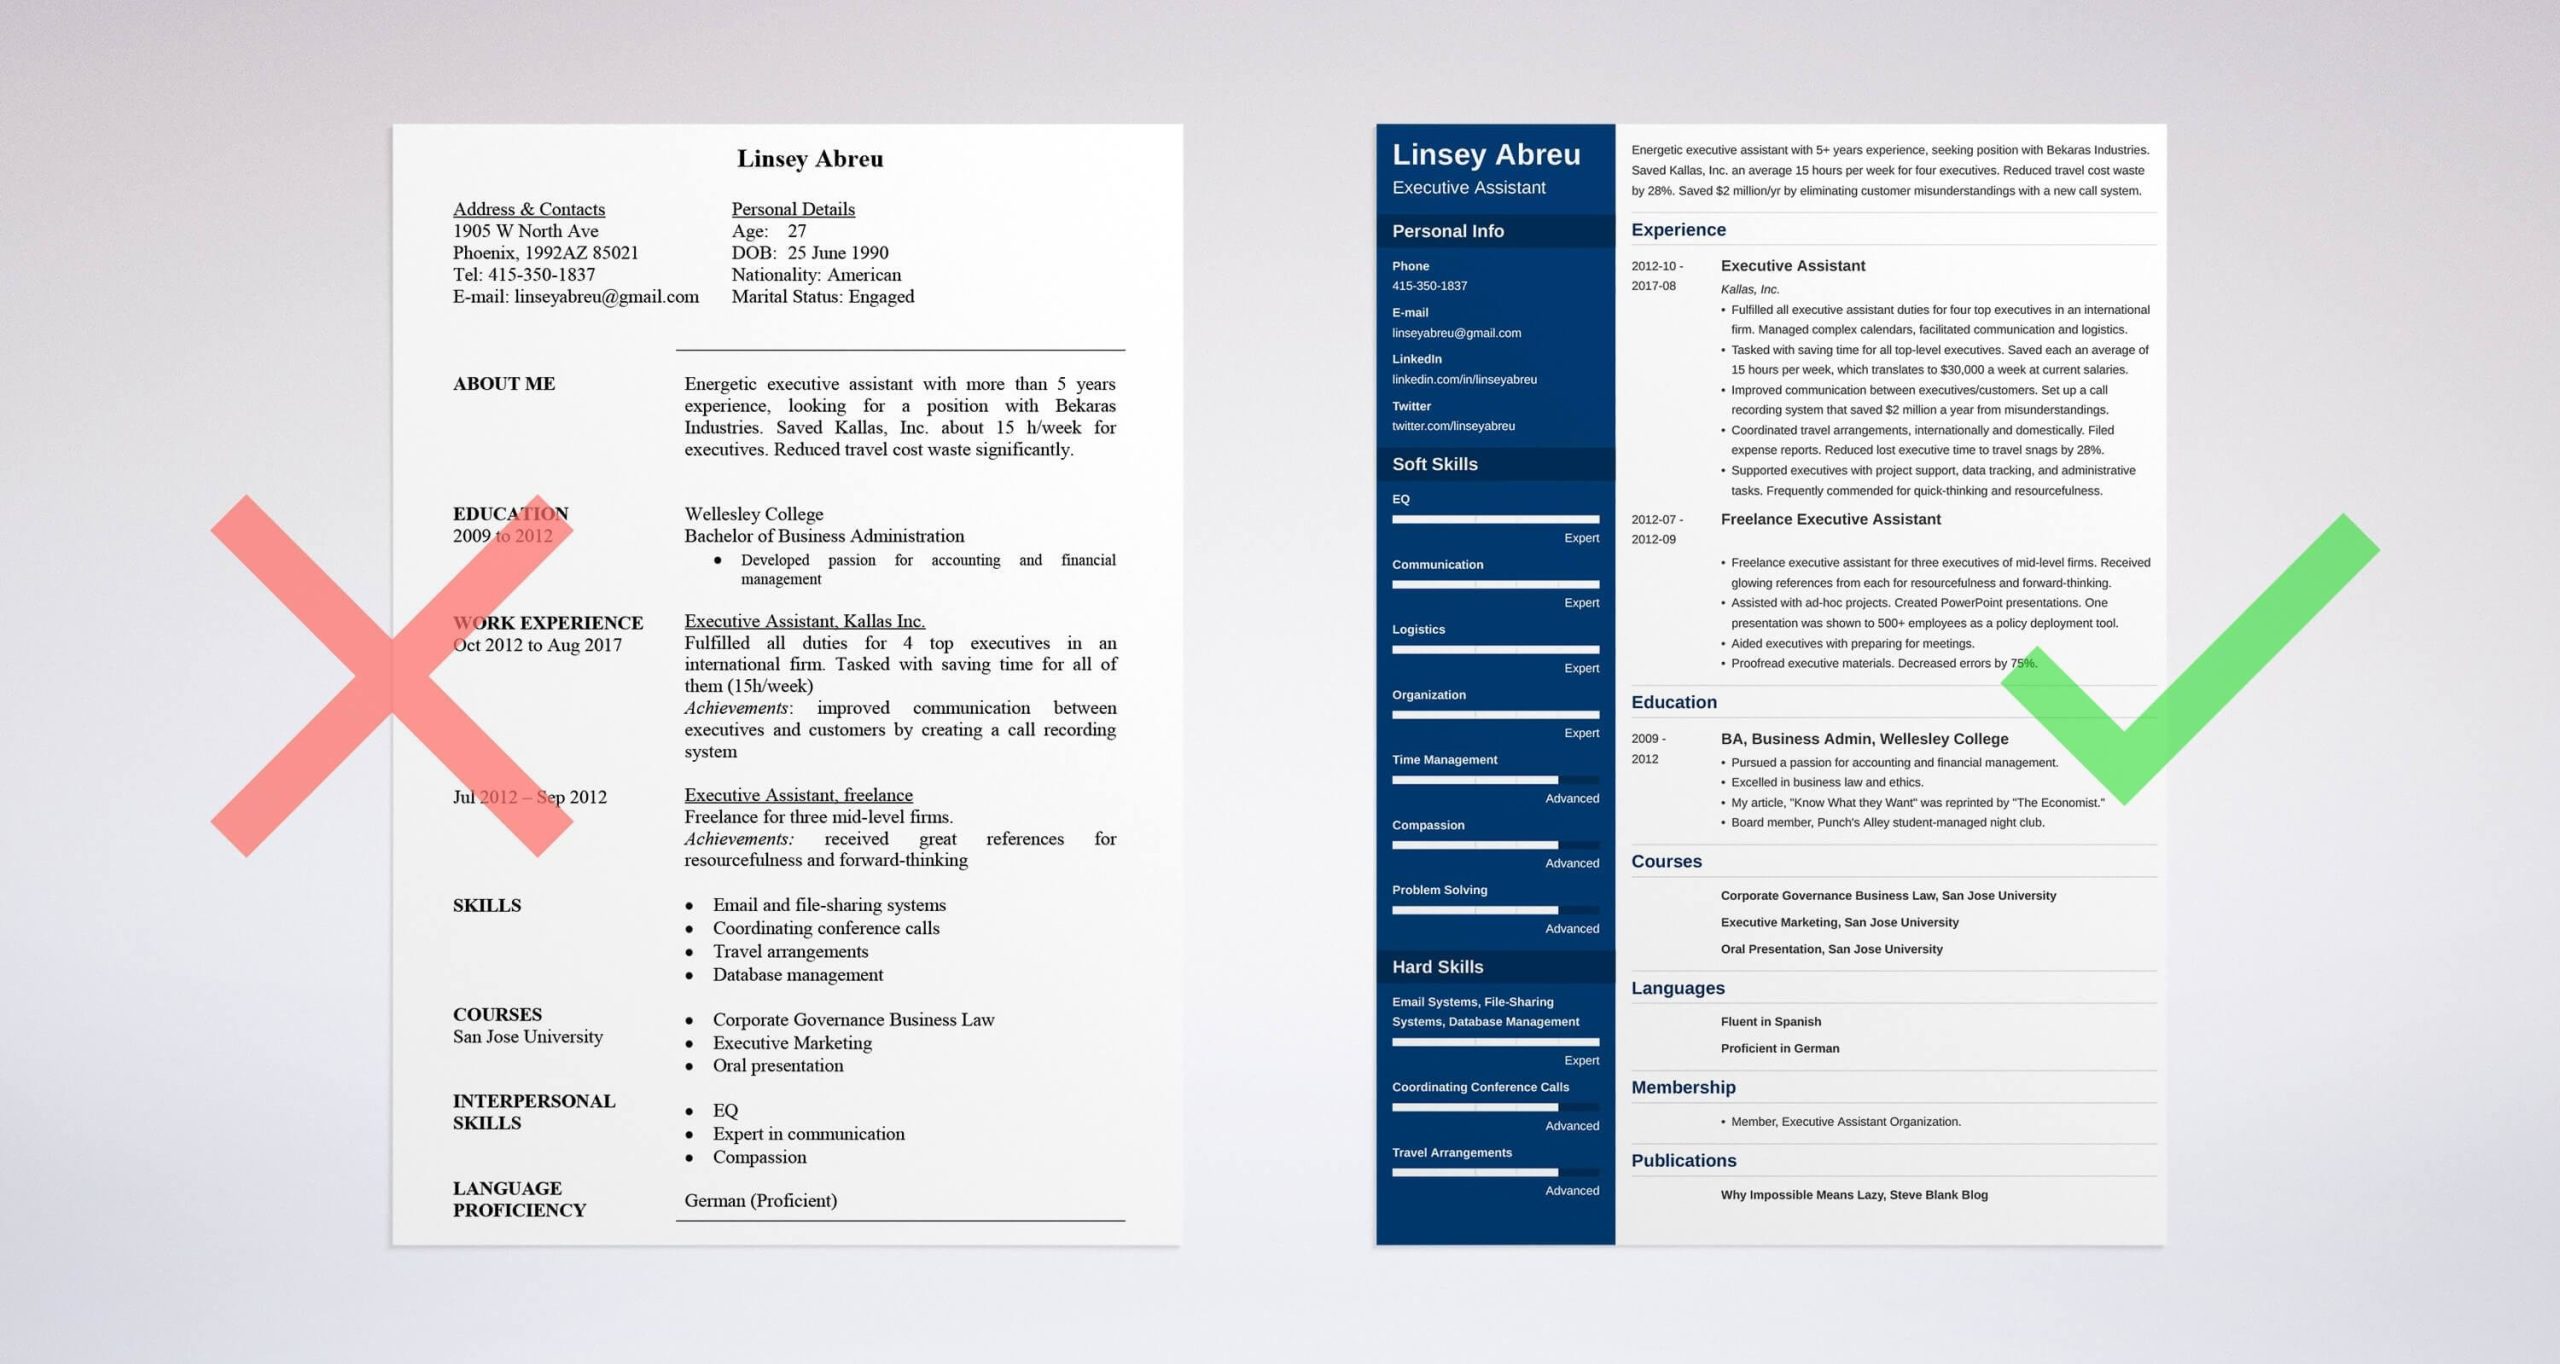 Business Analyst with Alladin Sample Resume Executive assistant Resume Sample [lancarrezekiqskills & Objective]